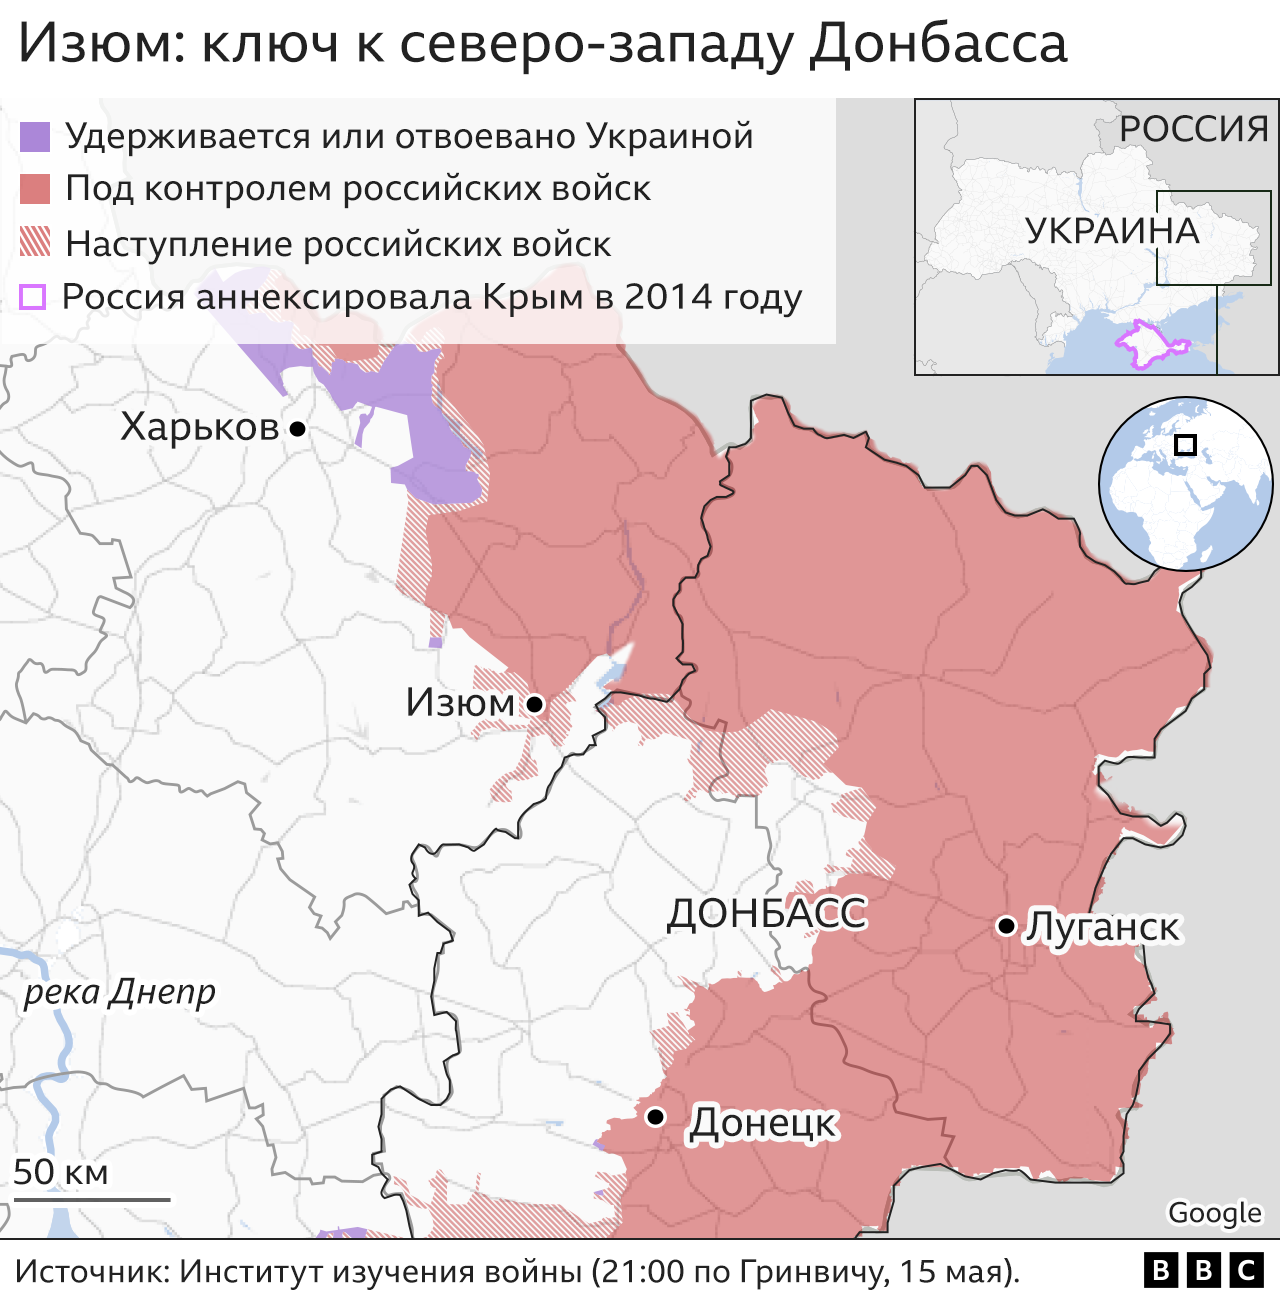 Карта с изображением Изюма и северо-запада Донбасса